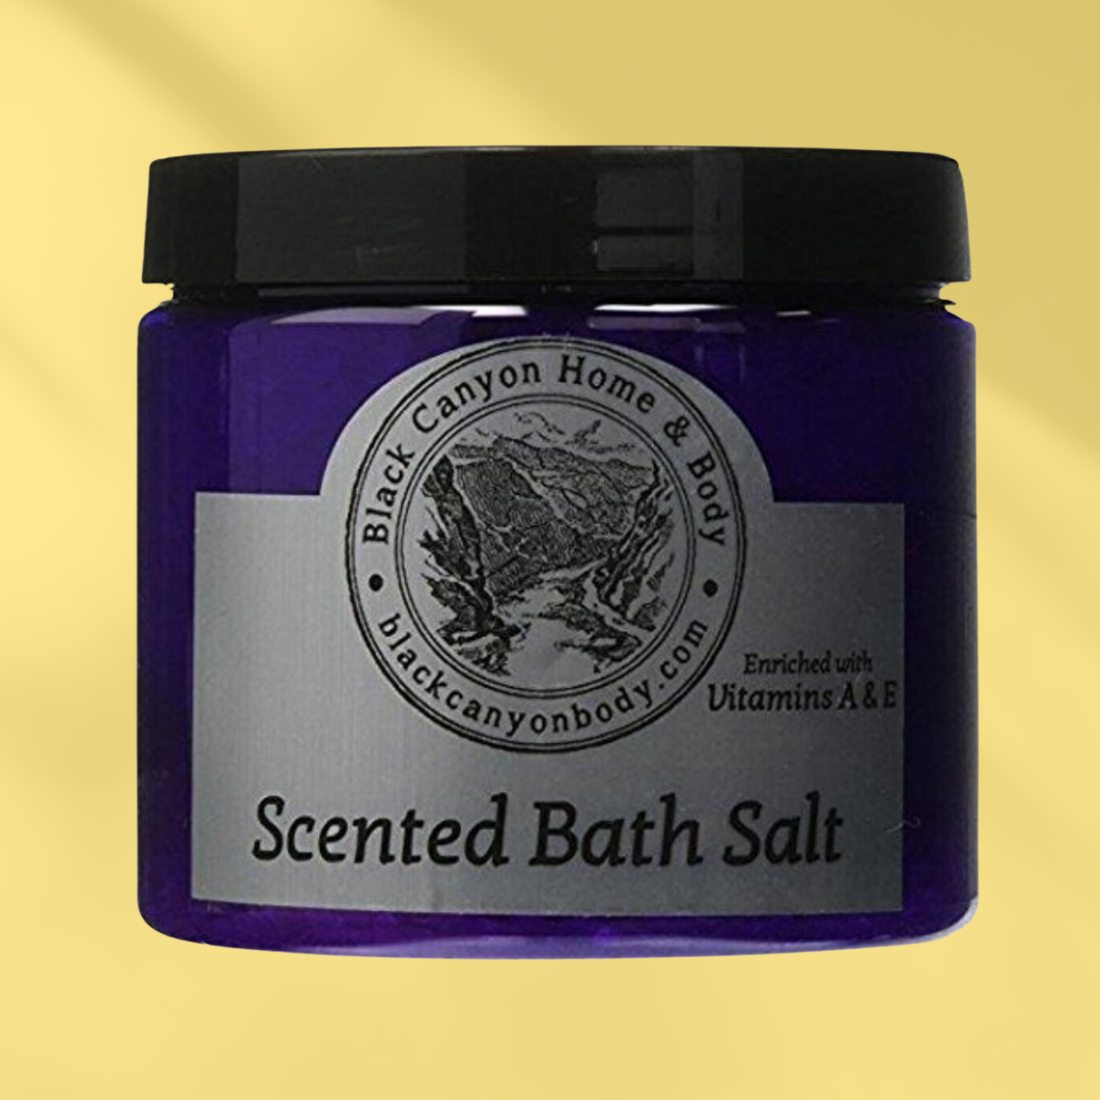 Black Canyon Sea Salt & Aloe Scented Sea Salt Bath Soak